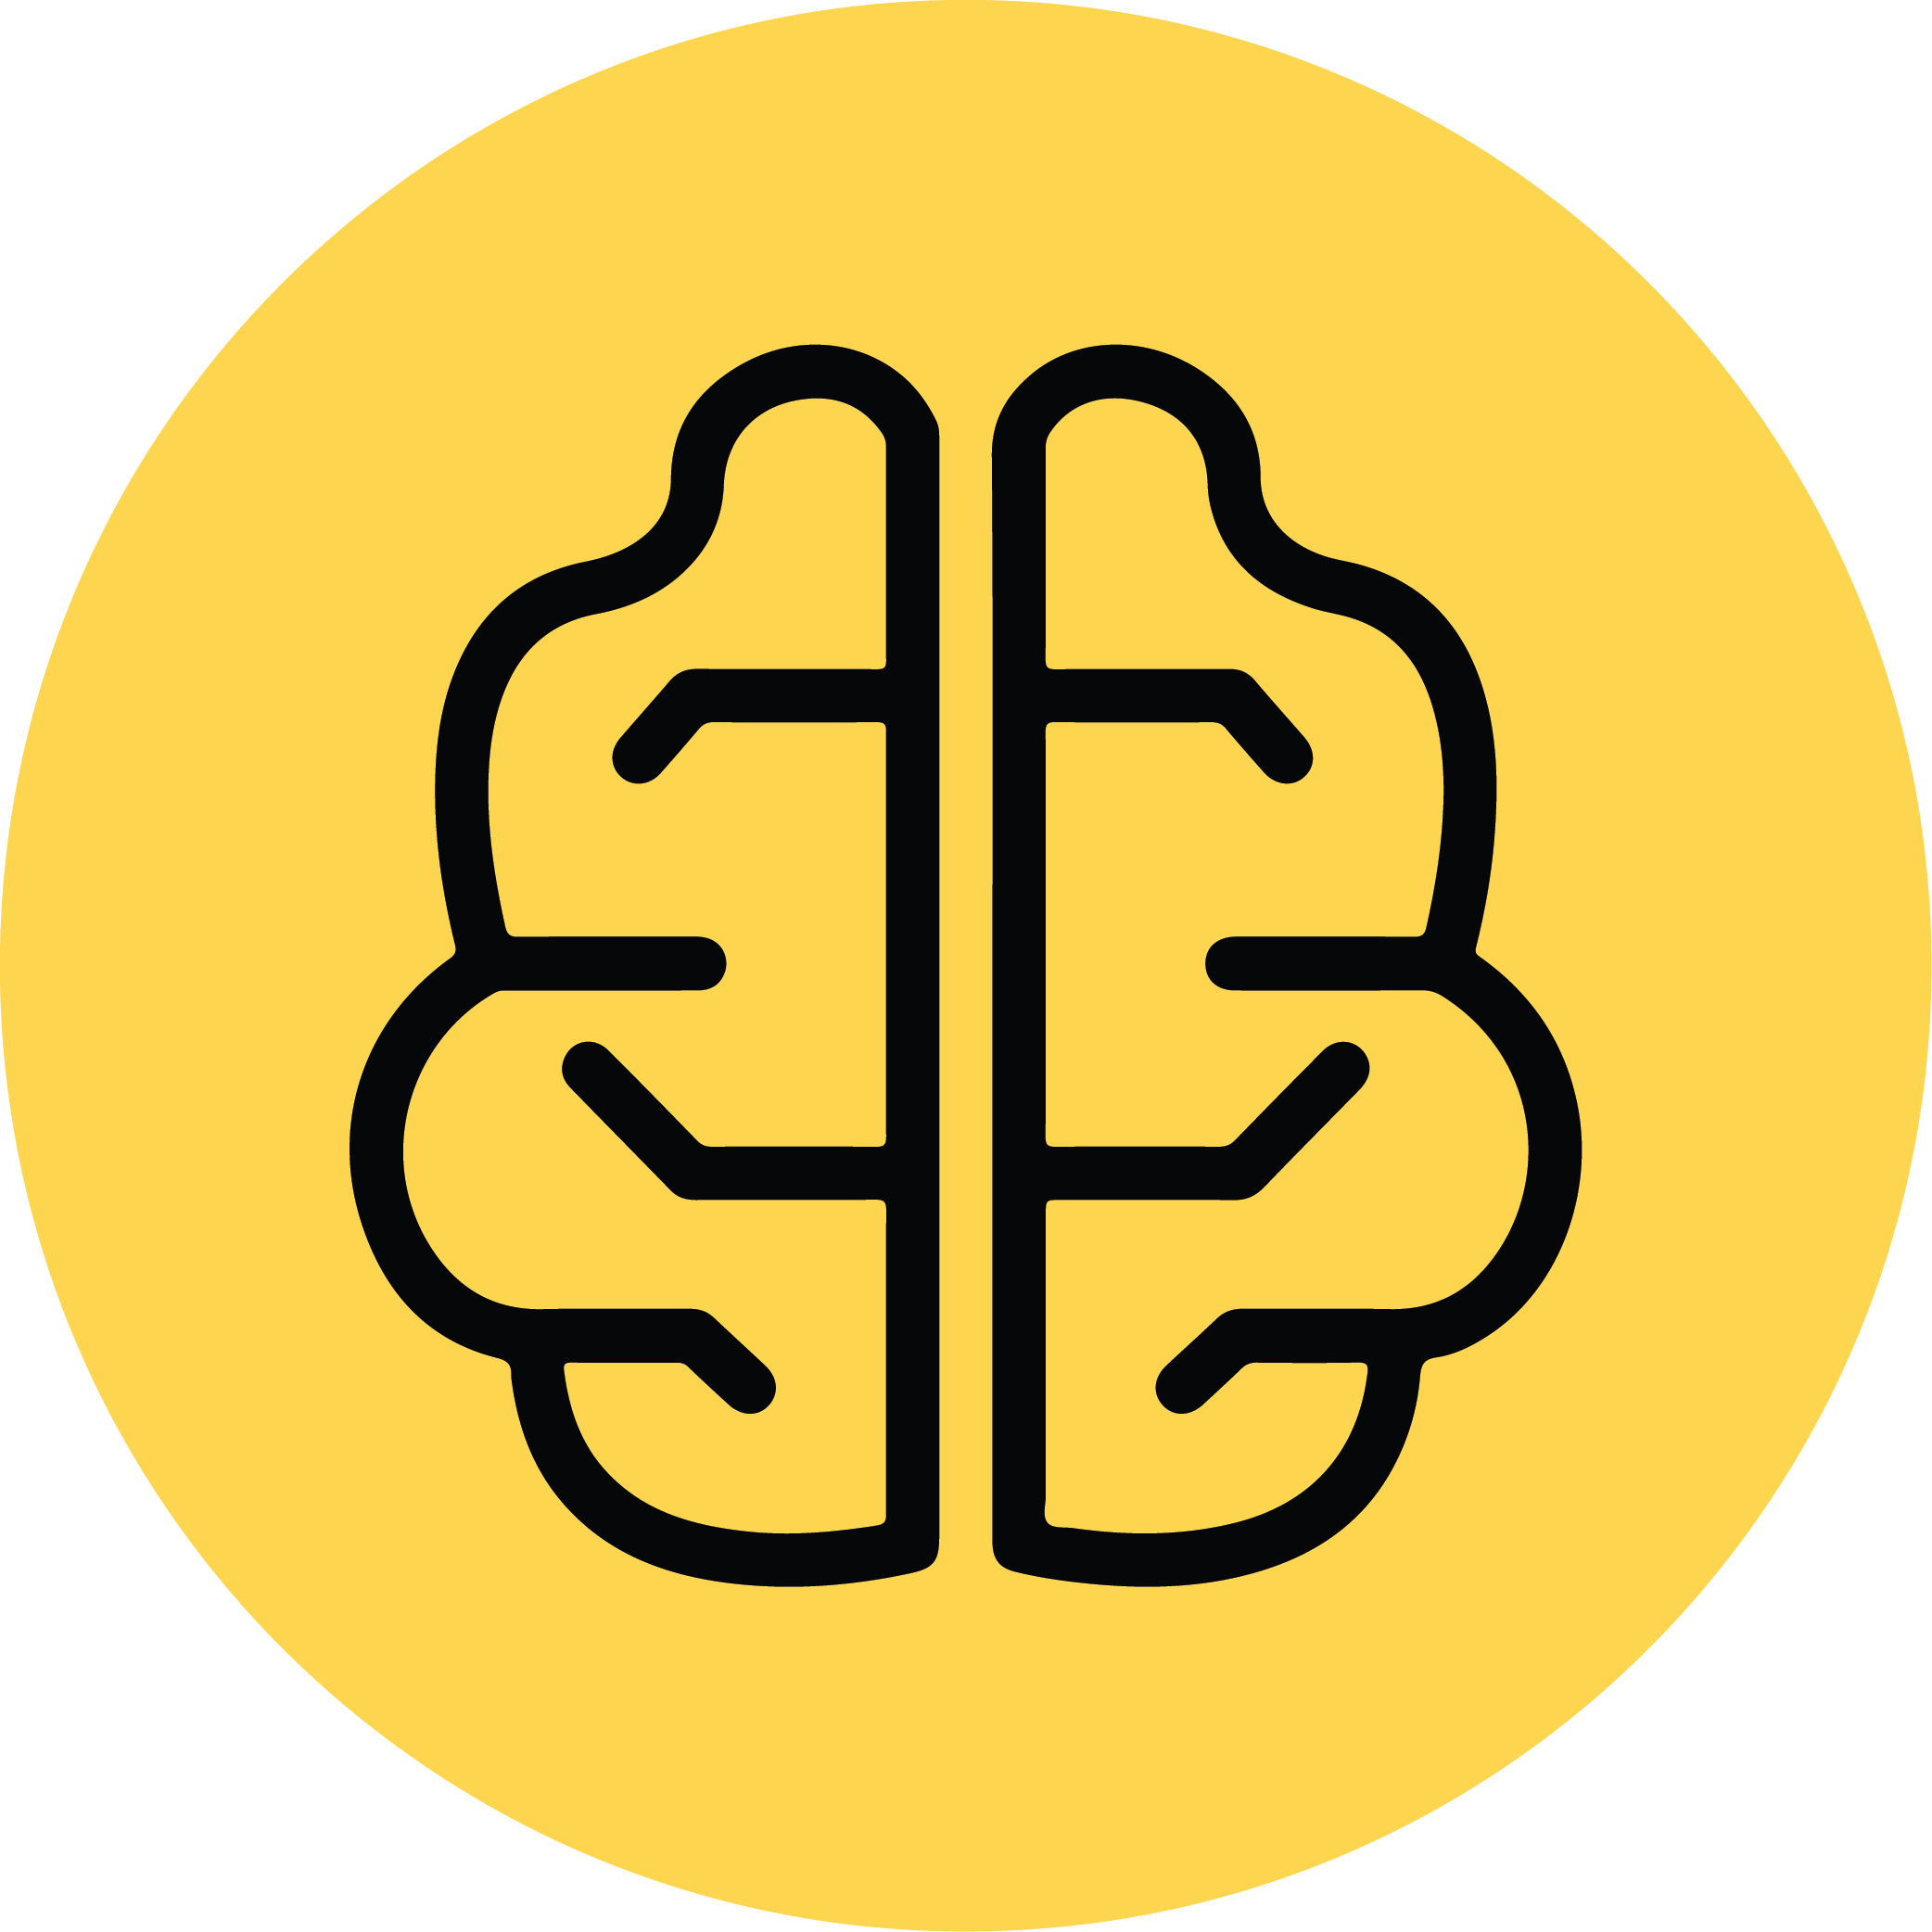 Brain icon on a yellow circle